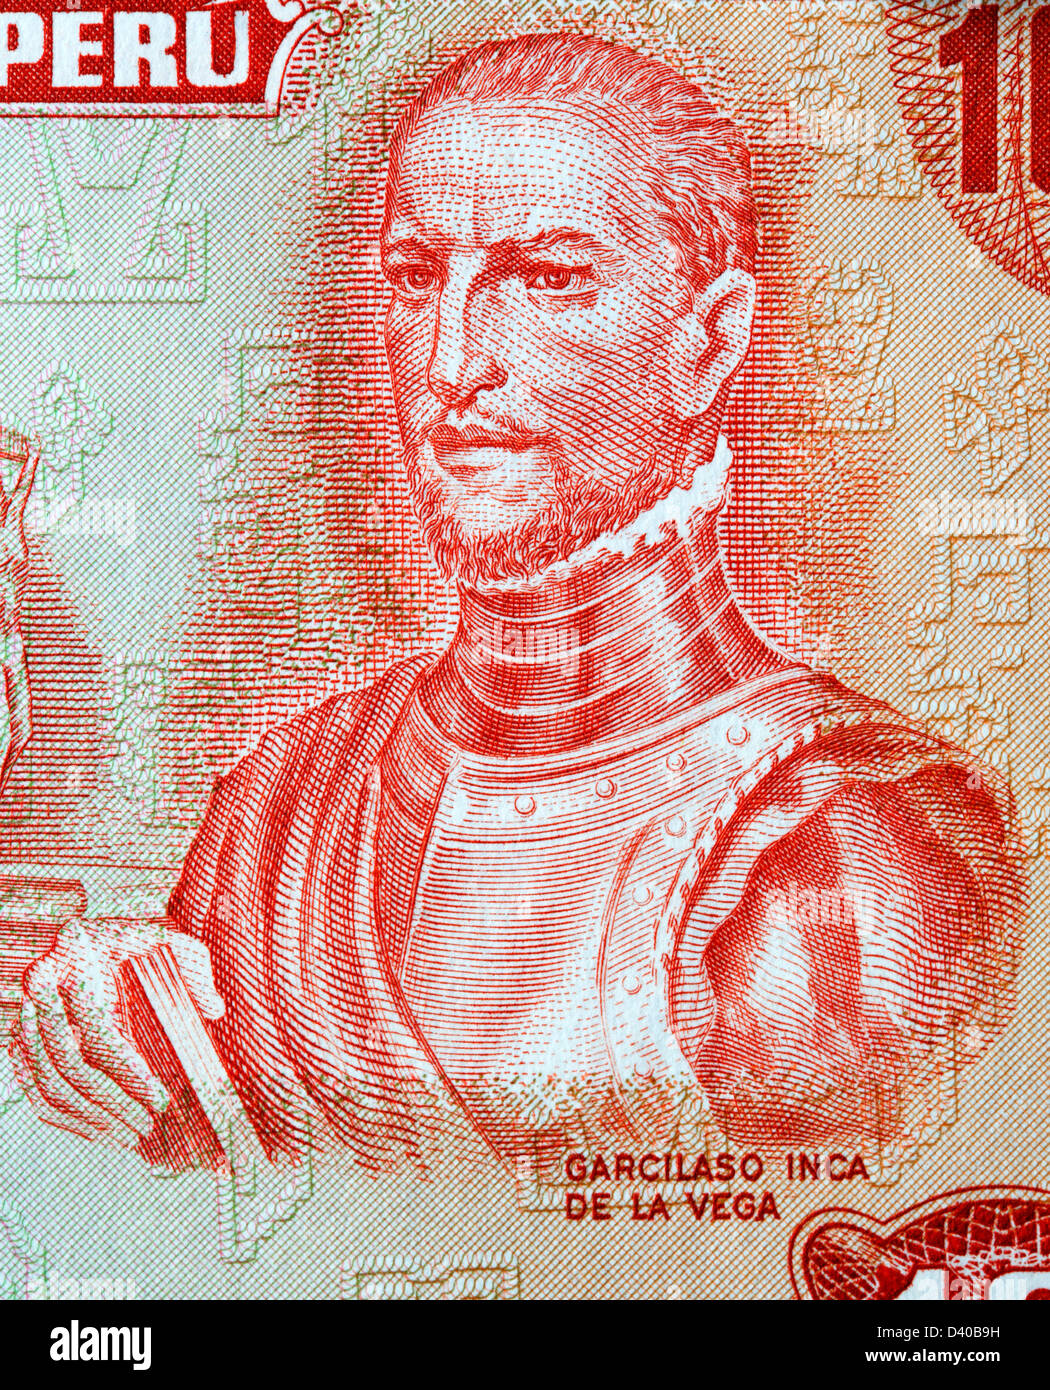 Portrait of Garcilaso Inca de la Vega from 10 Soles de Oro banknote, Peru, 1976 Stock Photo